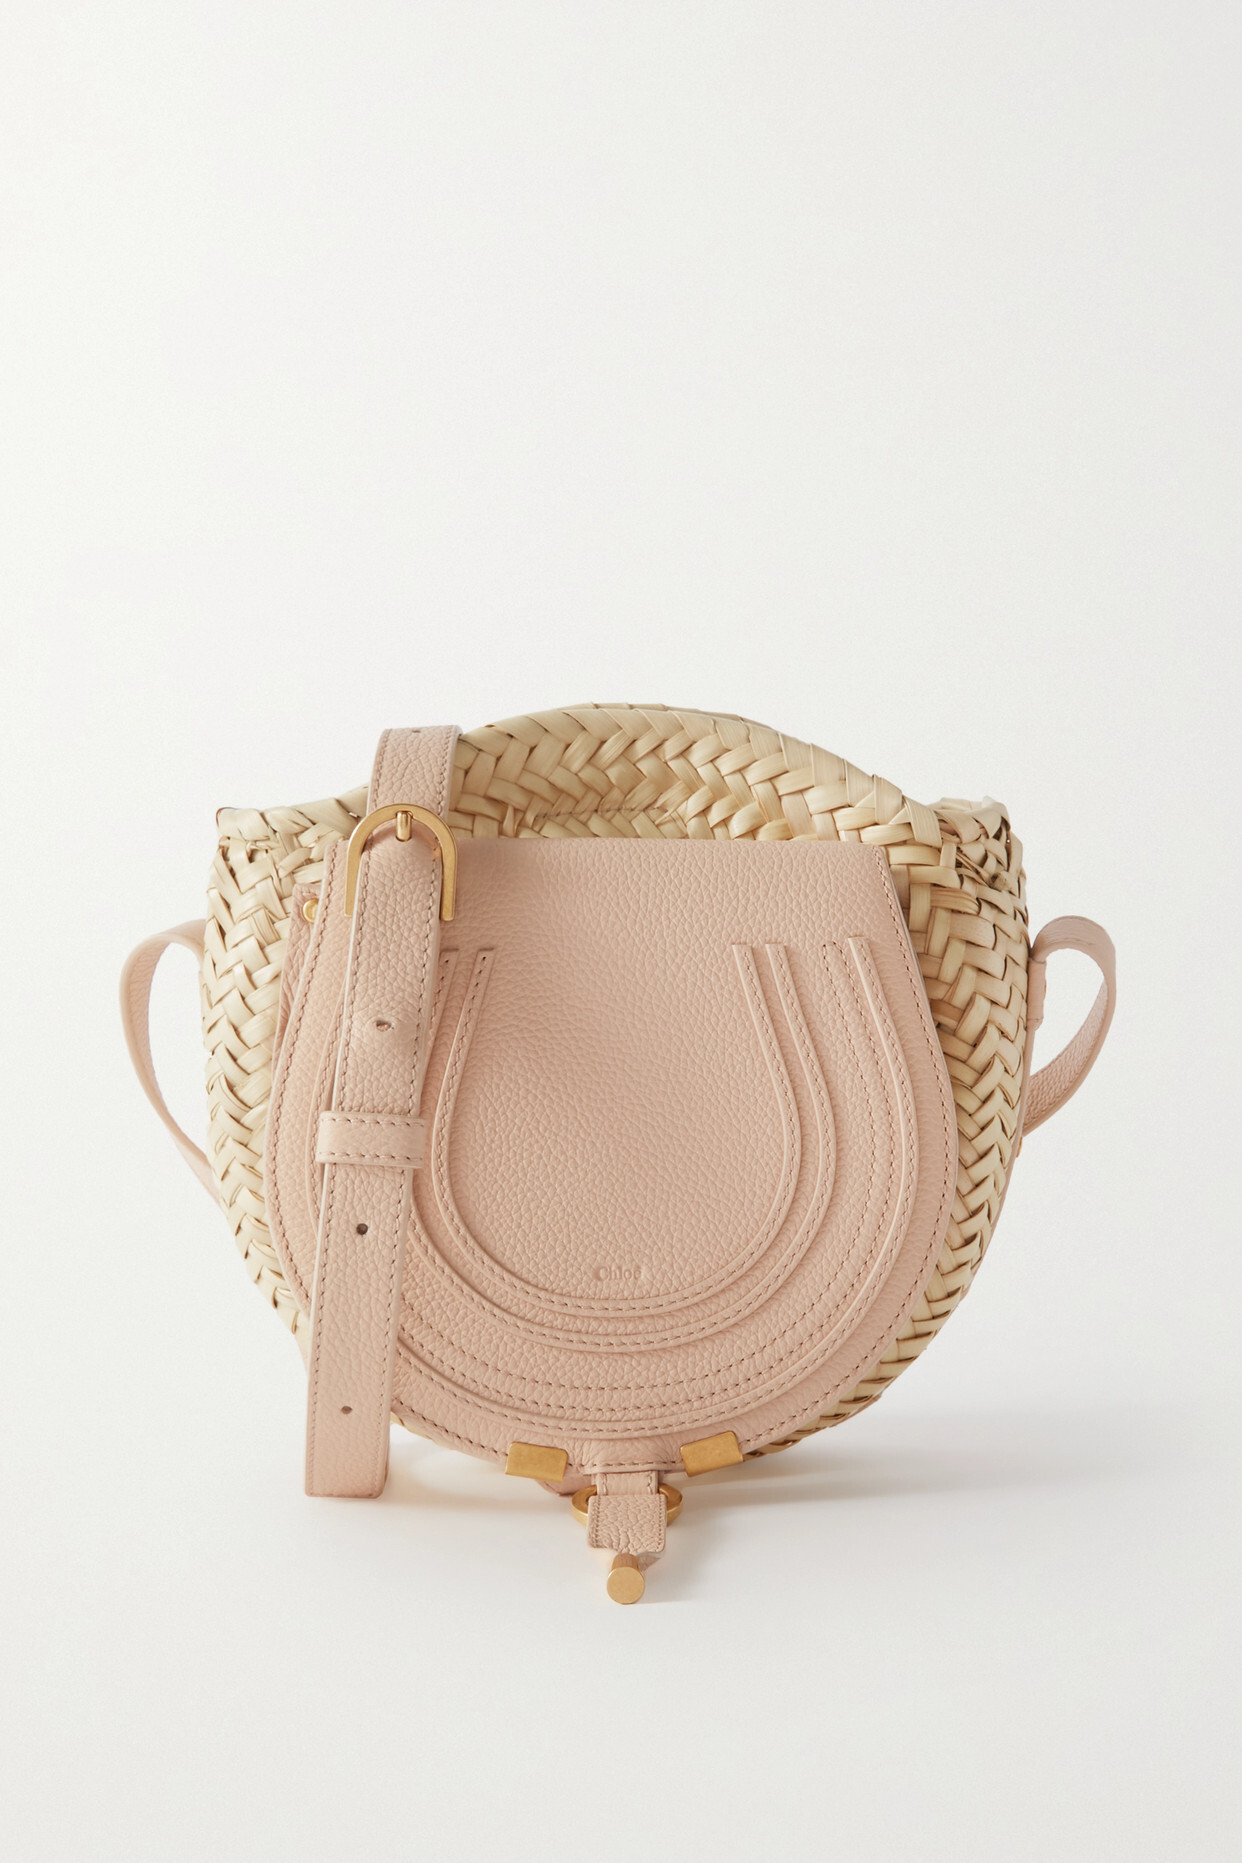 Chloé Chloé - + Net Sustain Marcie Leather And Raffia Shoulder Bag - Pink